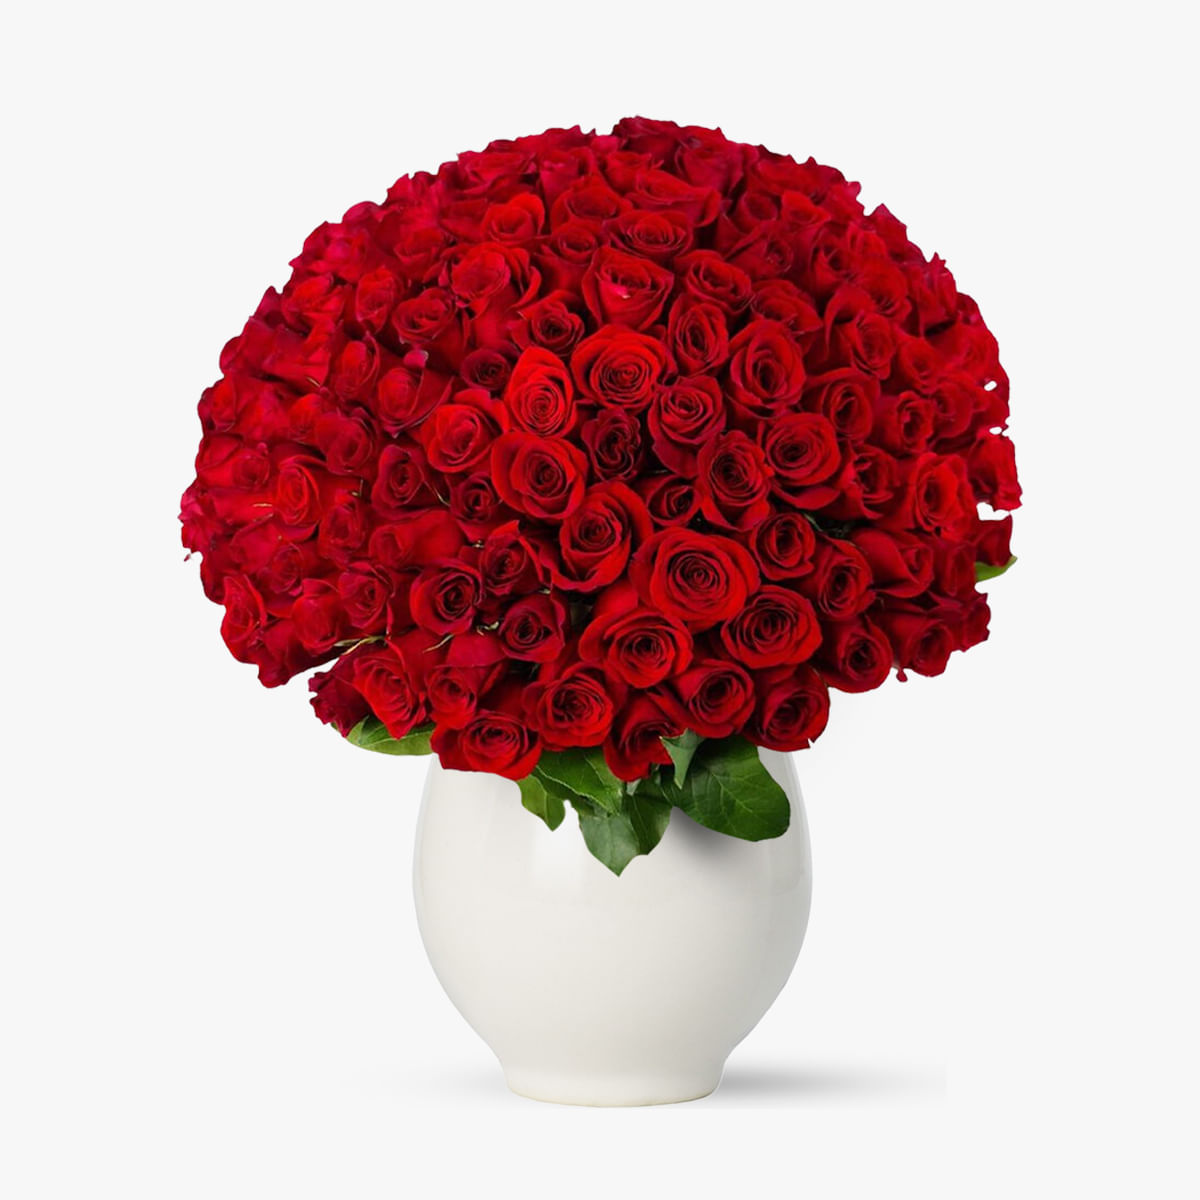 Buchet de 169 trandafiri rosii – Standard 169